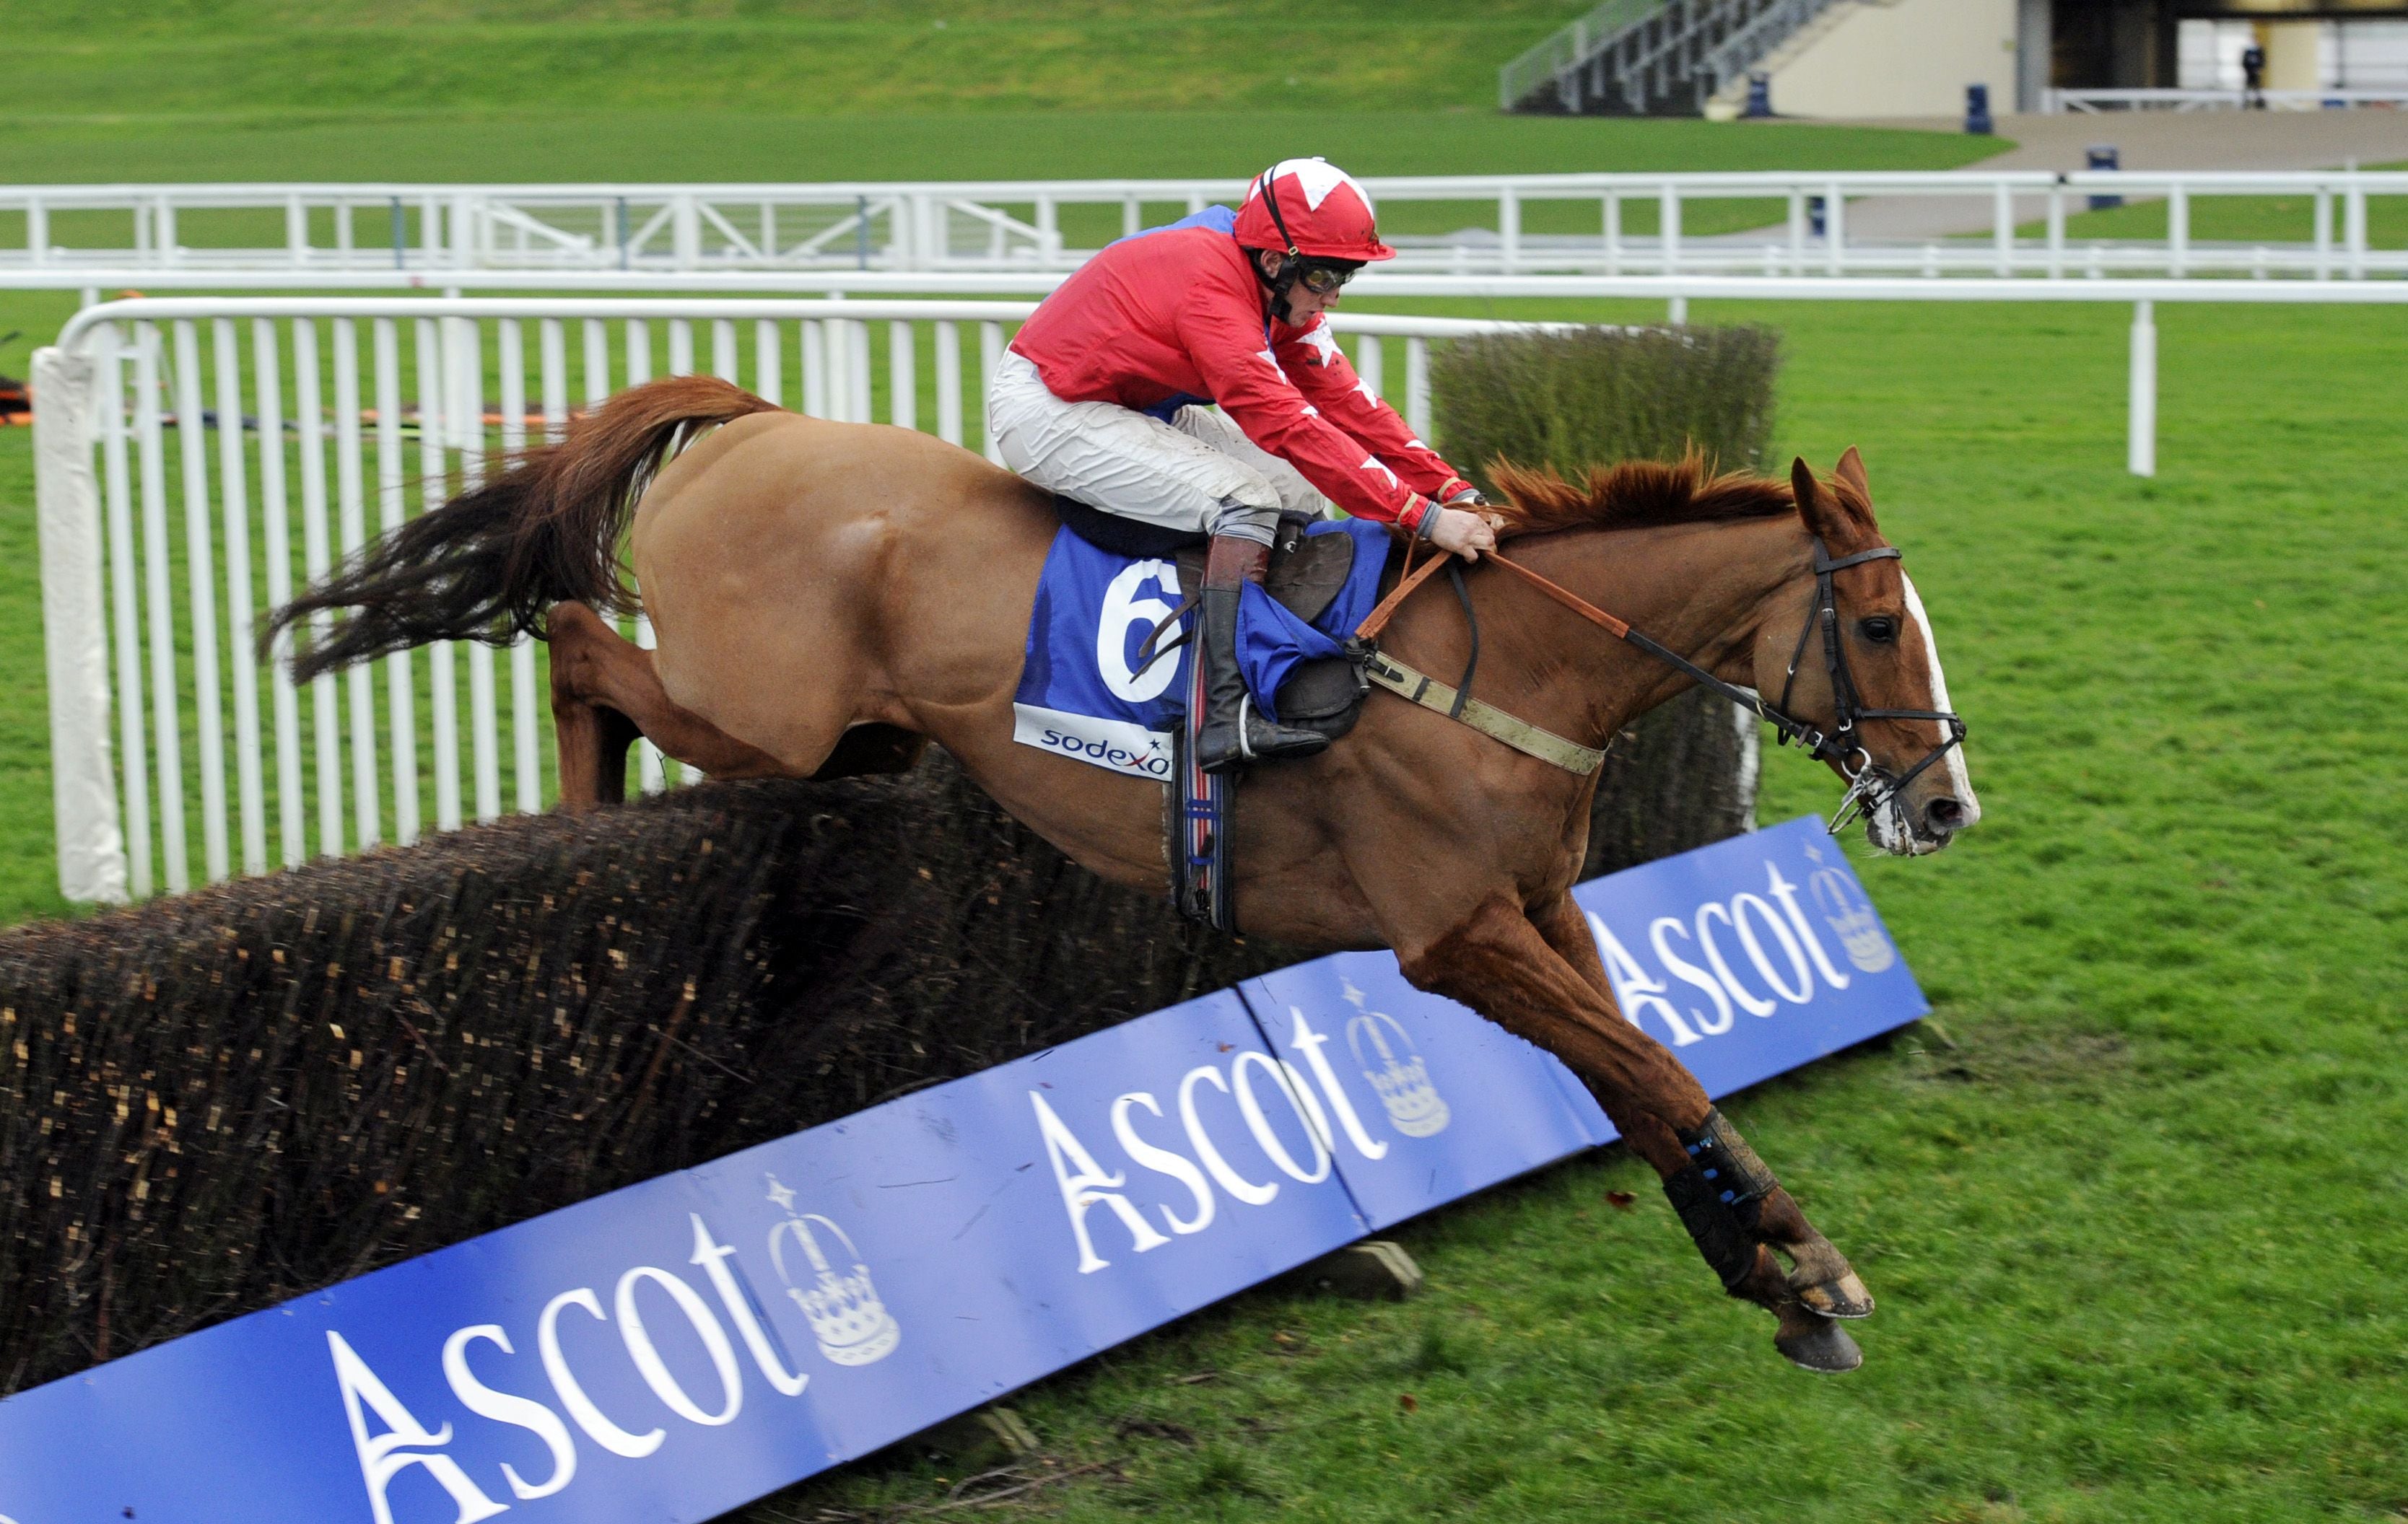 Horse racing image over hurdles